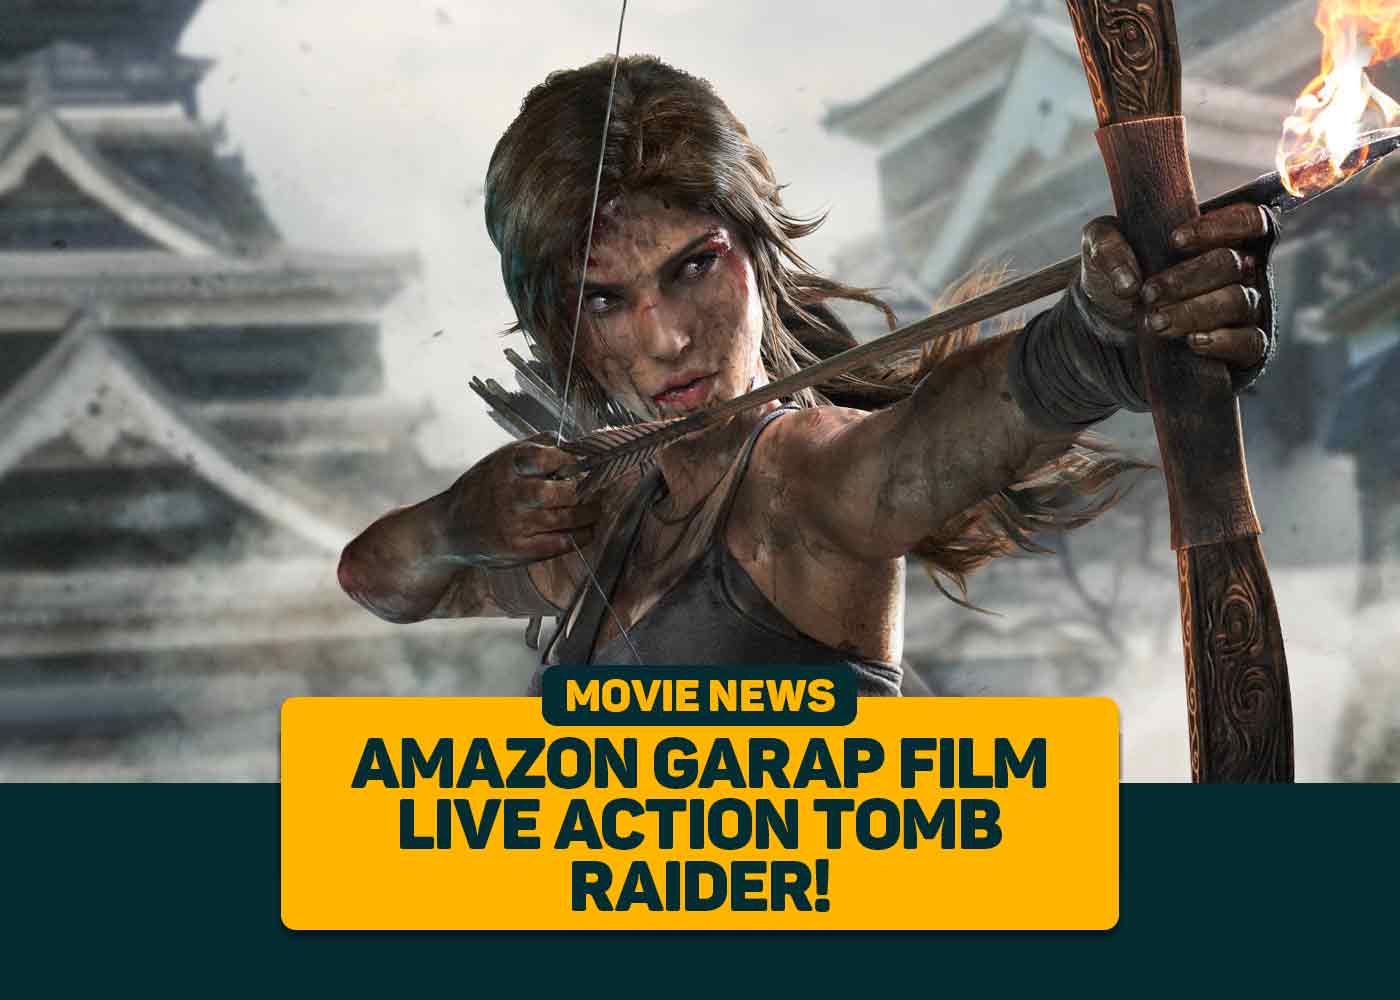 Amazon Garap Film Live Action Tomb Raider!